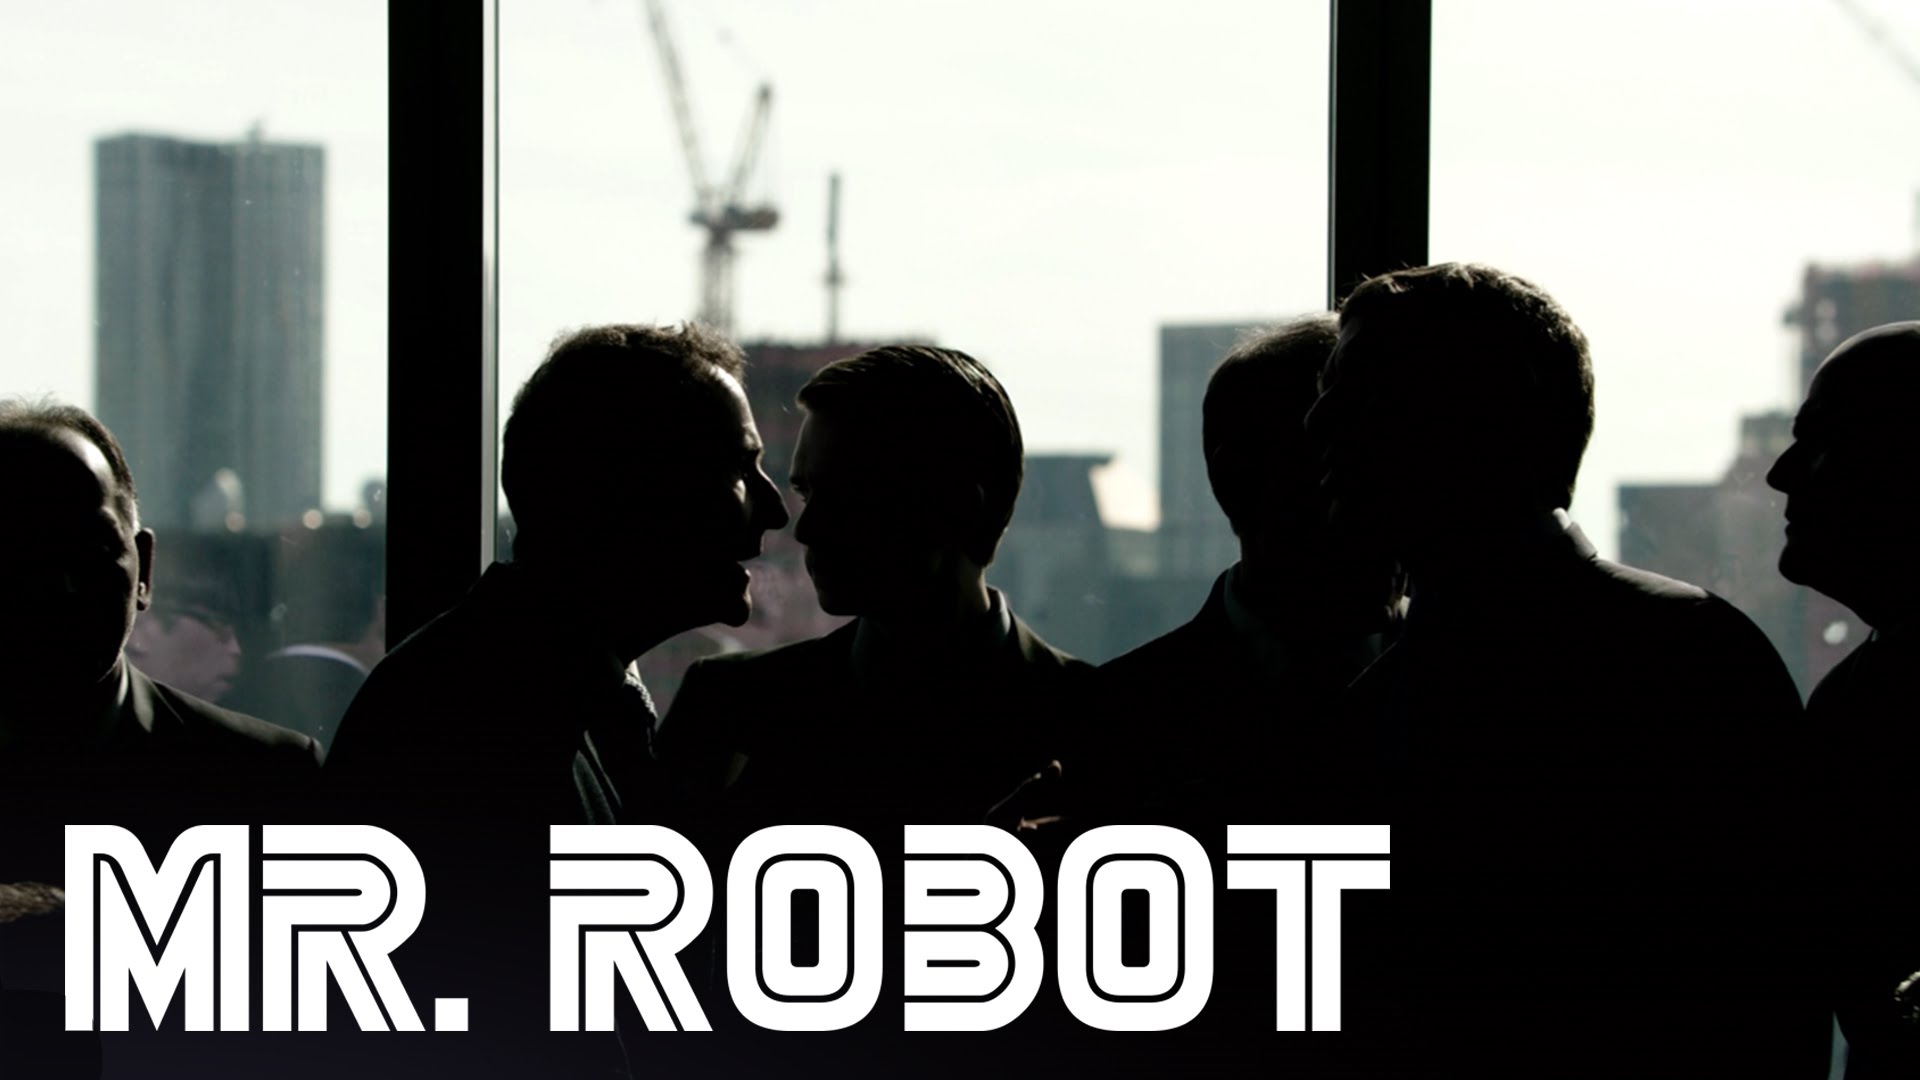 Mr. Robot: Latest News, Photos, Videos on Mr. Robot 